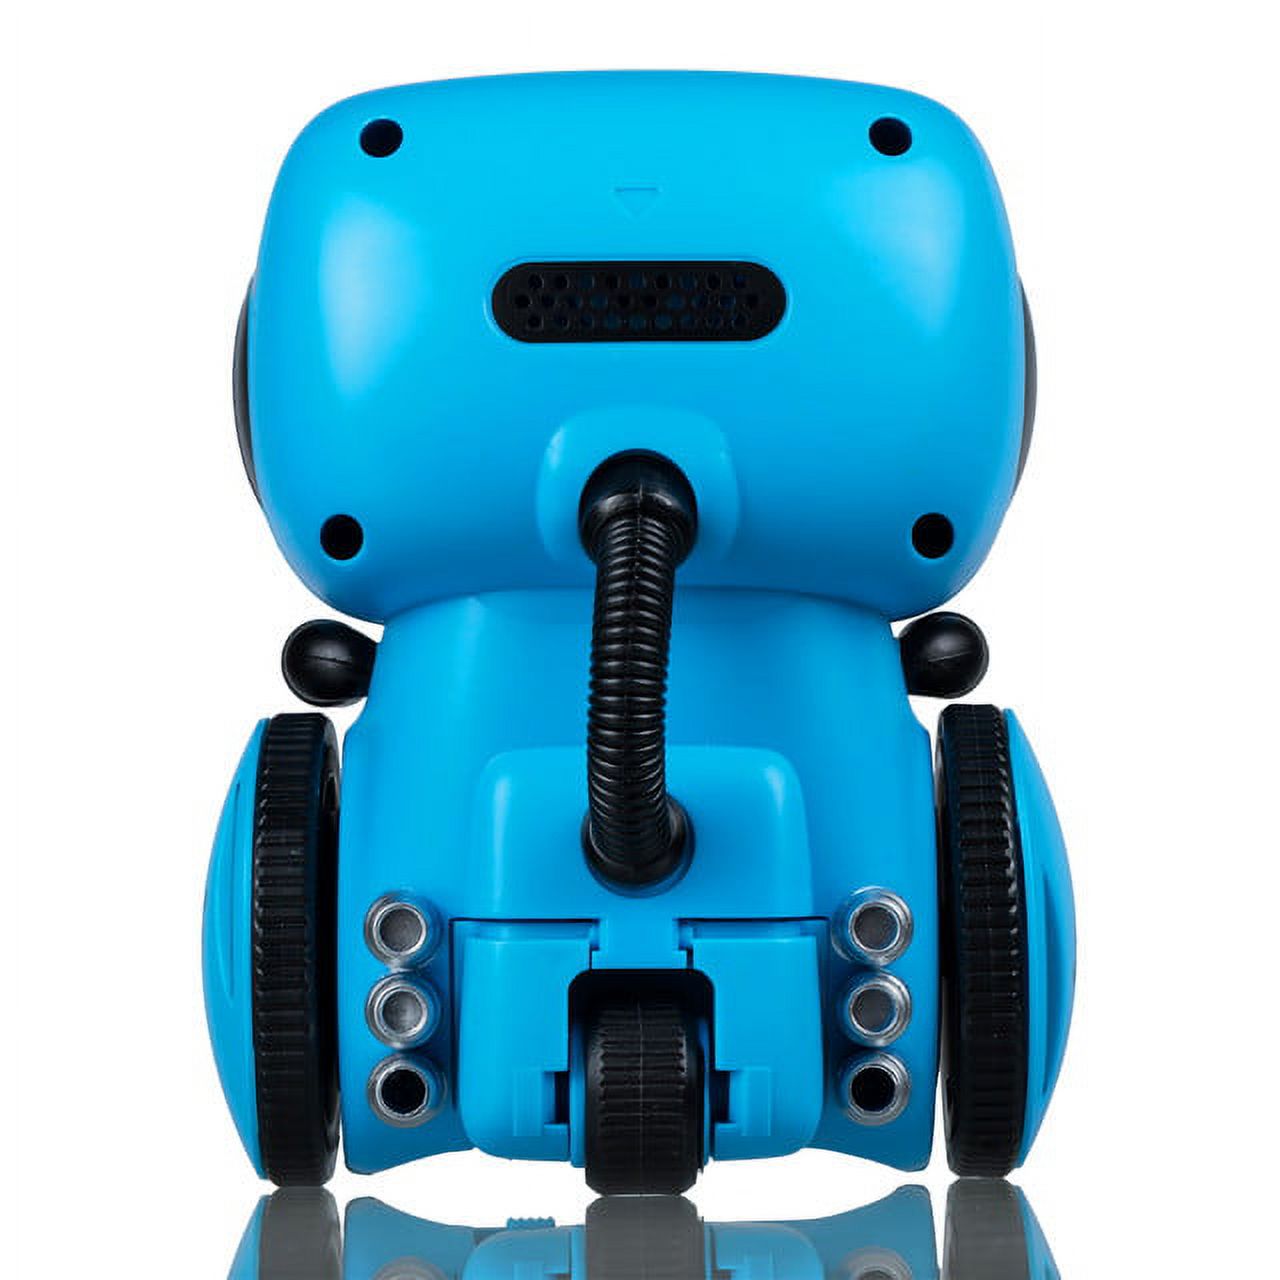 Contixo Kids Smart Robot Toy Mini Robot Talking Singing Dancing Interactive Voice Control Touch Sensor Speech Recognition Infant Toddler Children Robotics - R1 Blue - image 5 of 6